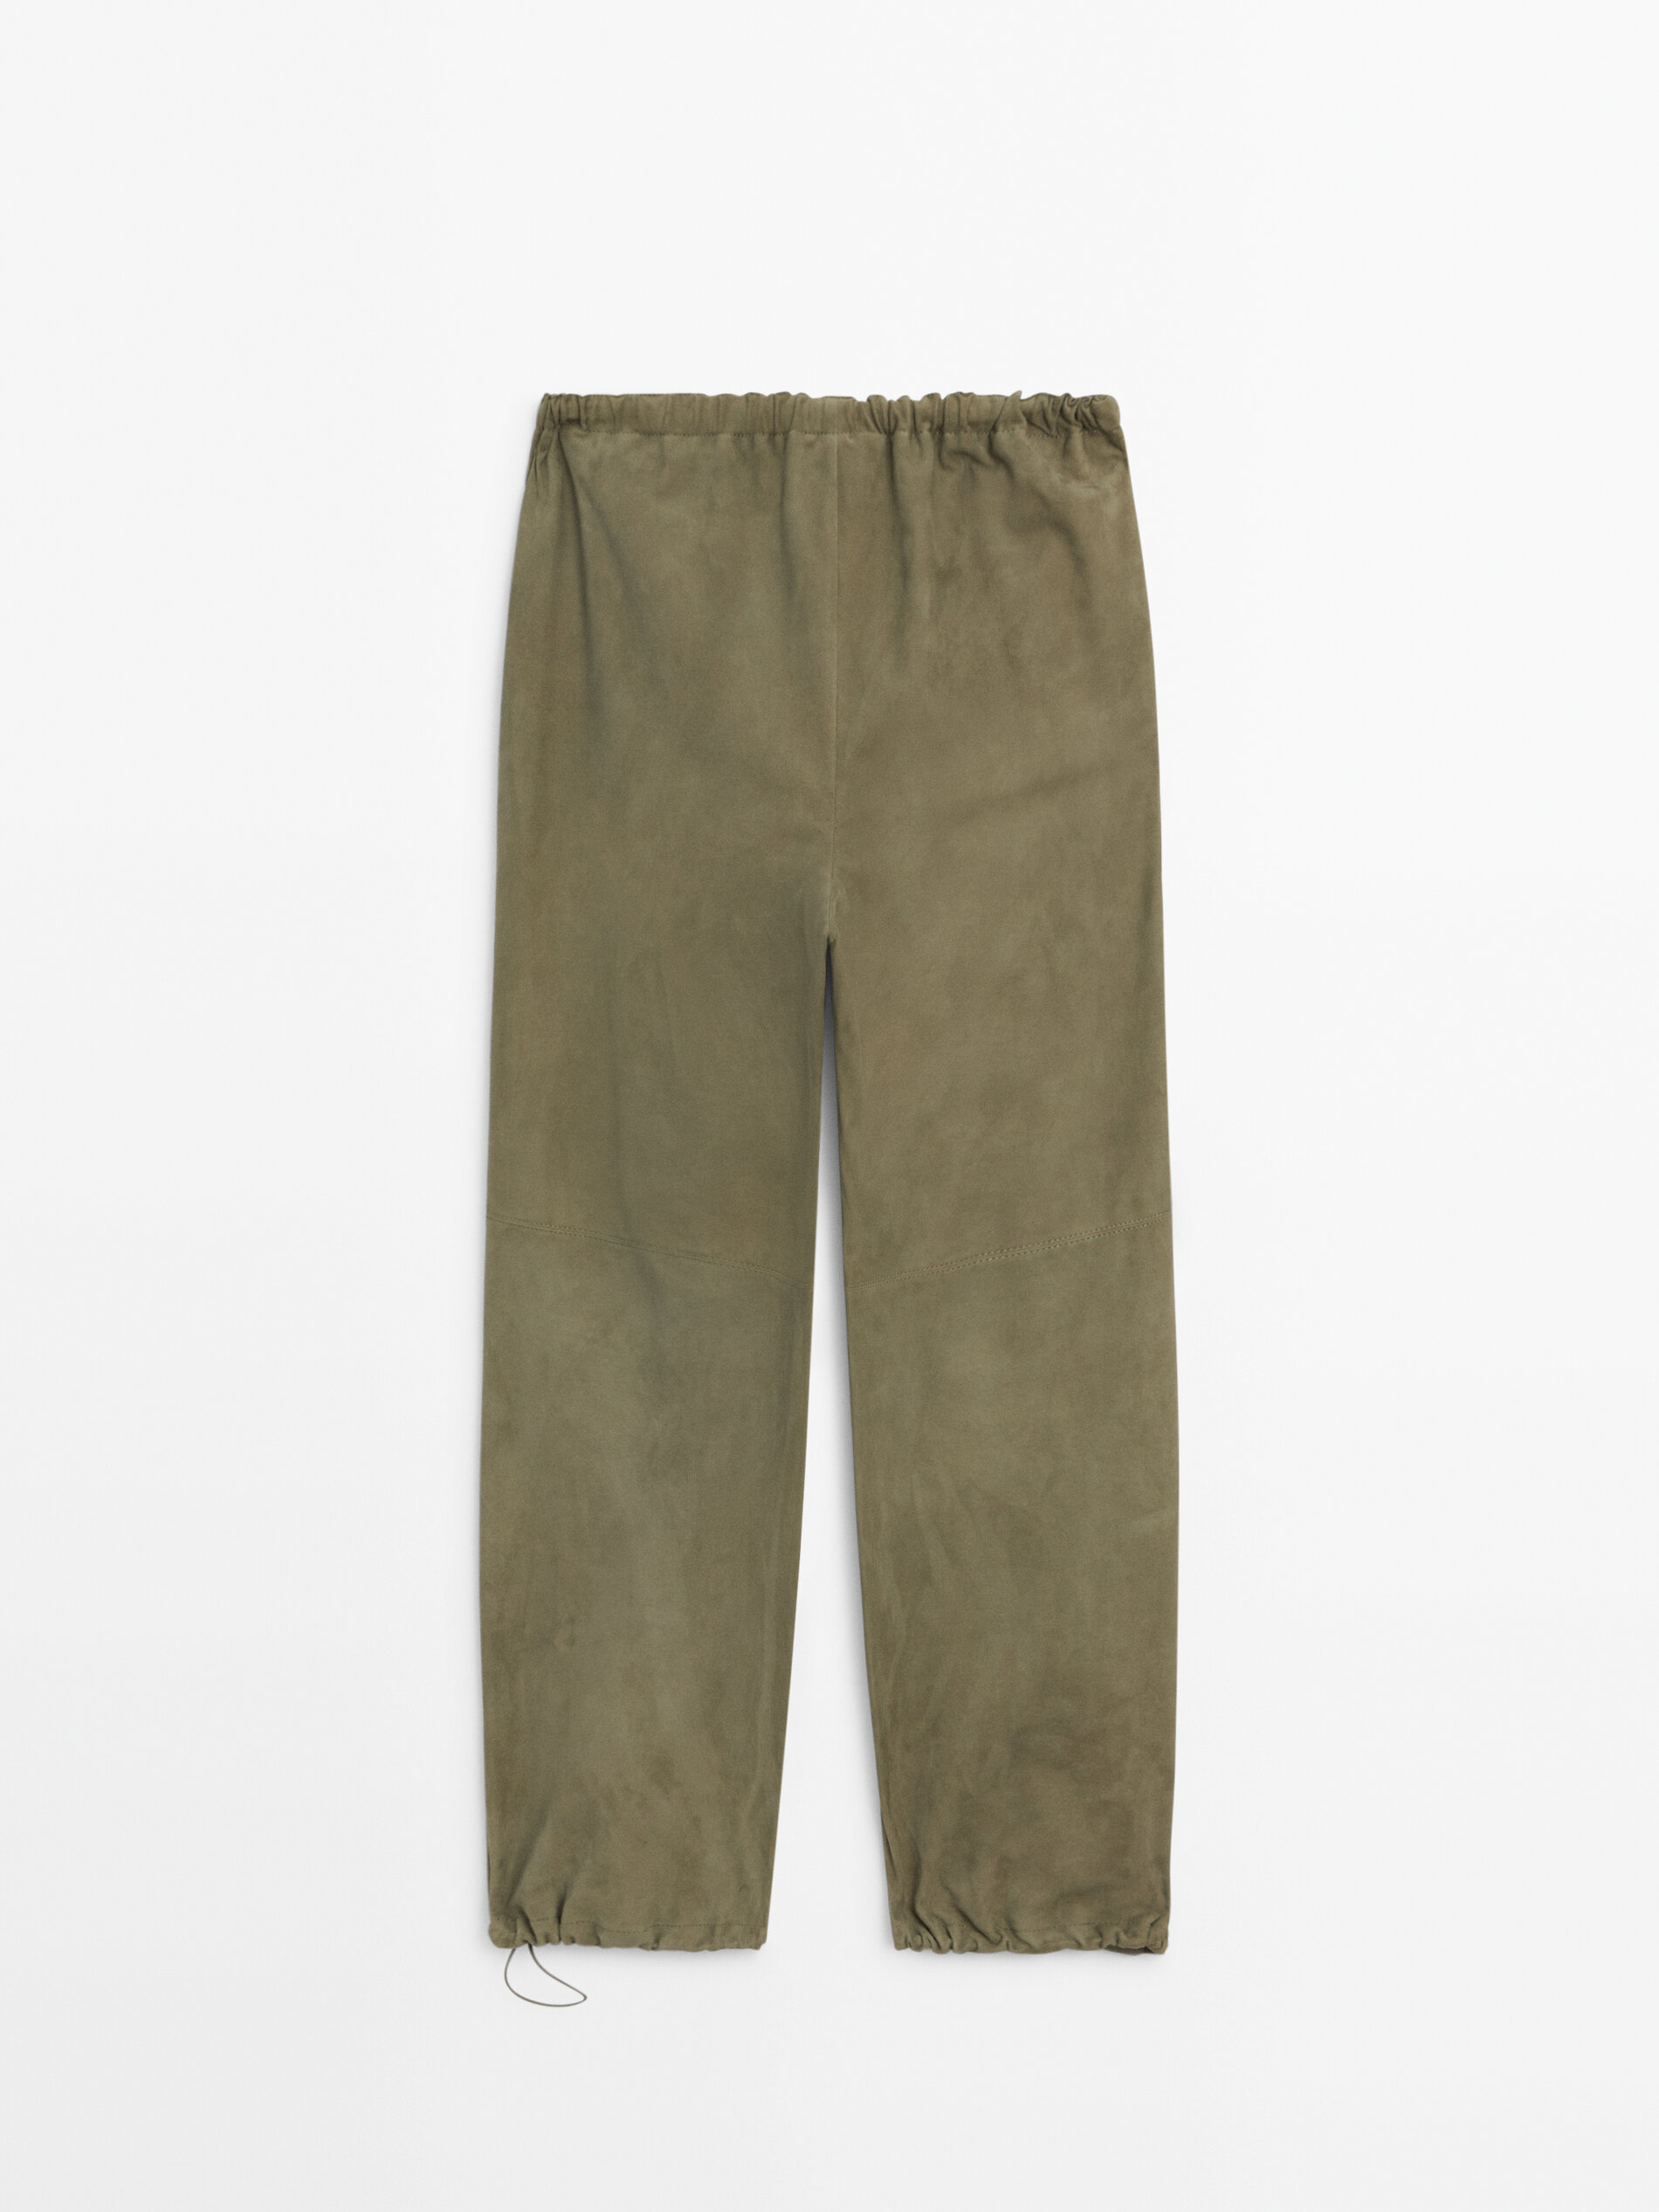 Buy Vintage Slacks Pants Size: L Massimo Dutti Online in India - Etsy